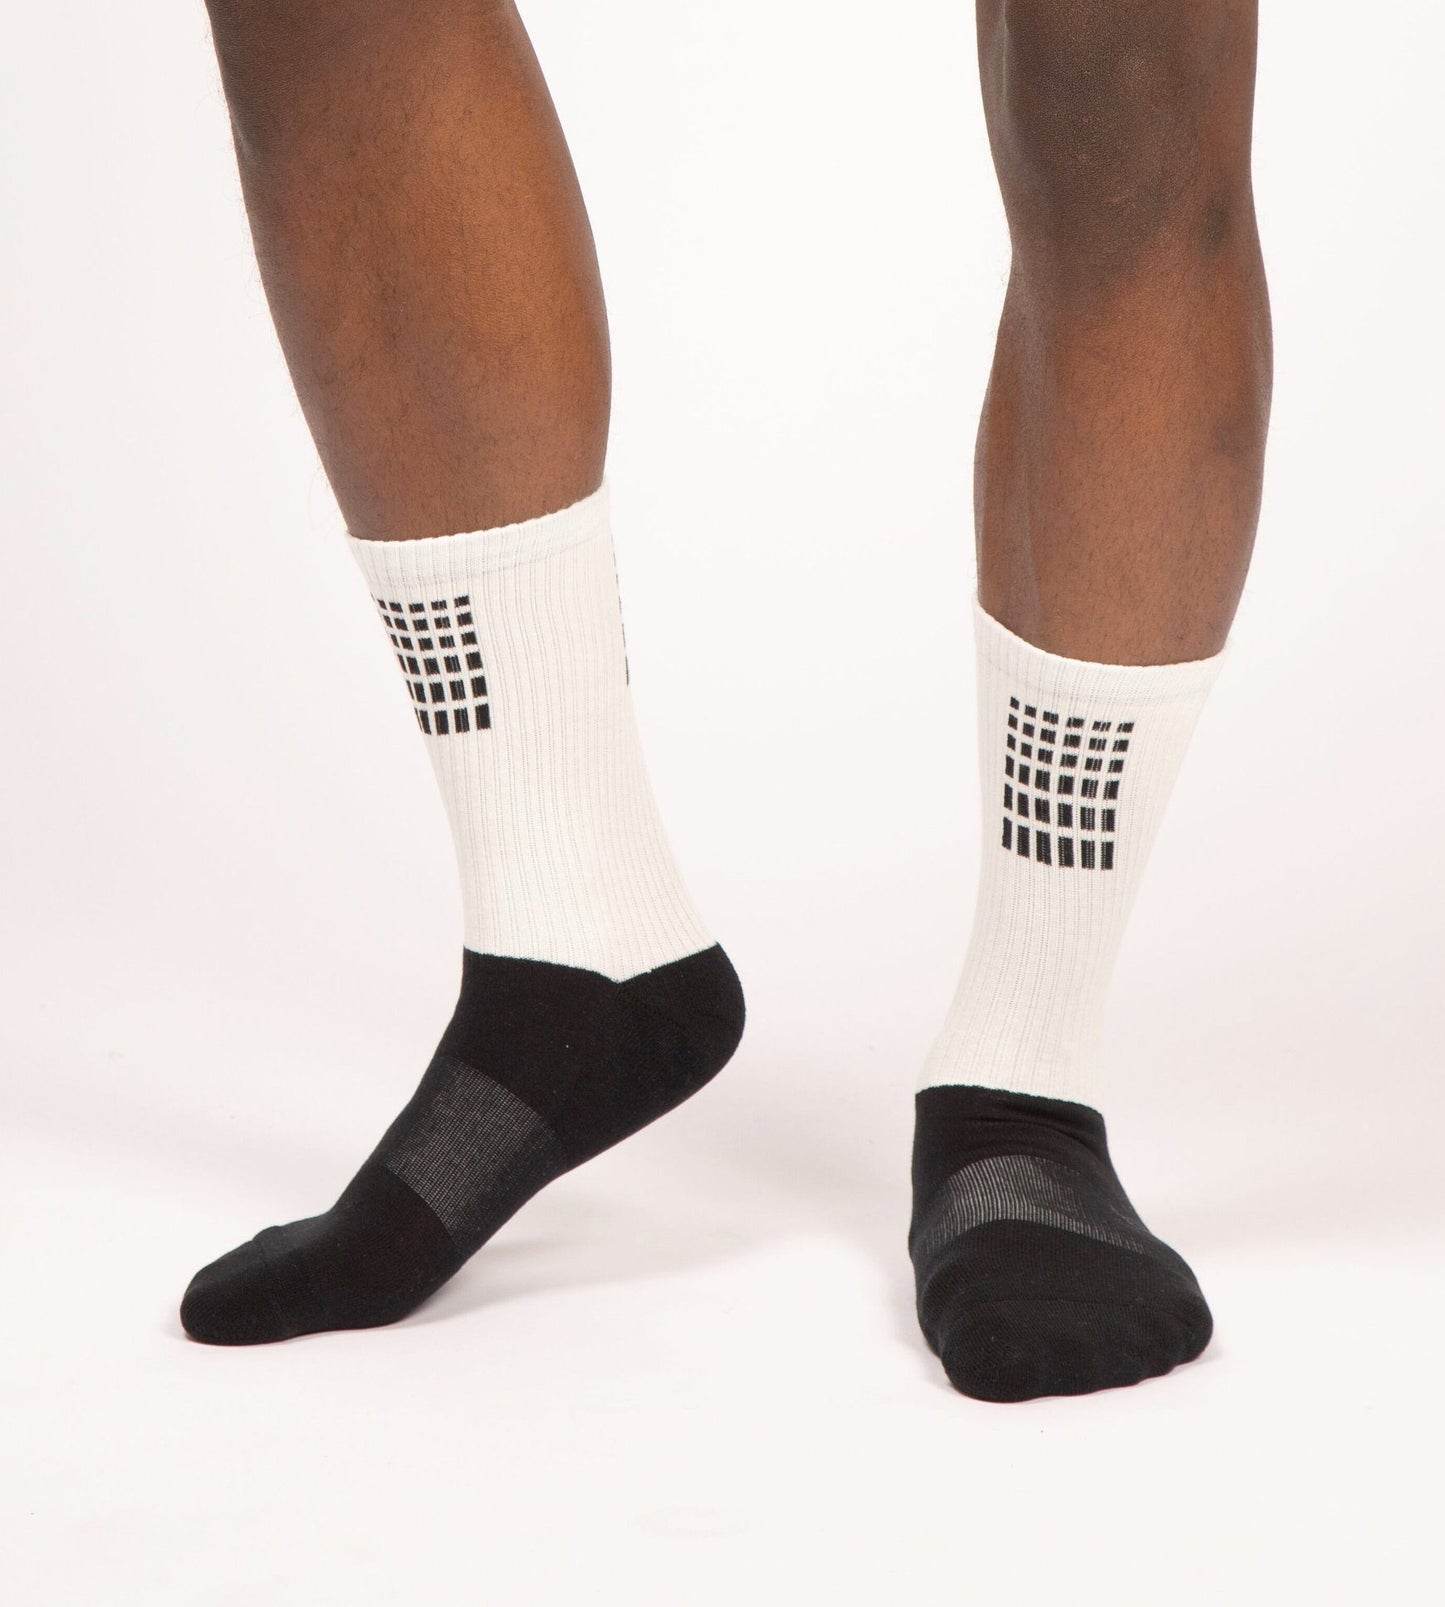 D'Amato Men's Cushion Crew Socks contains colors Sienna, Whitesmoke, Dark slate gray, Gains boro, Dark olive green, Gray, Sienna, Silver, Linen, Black